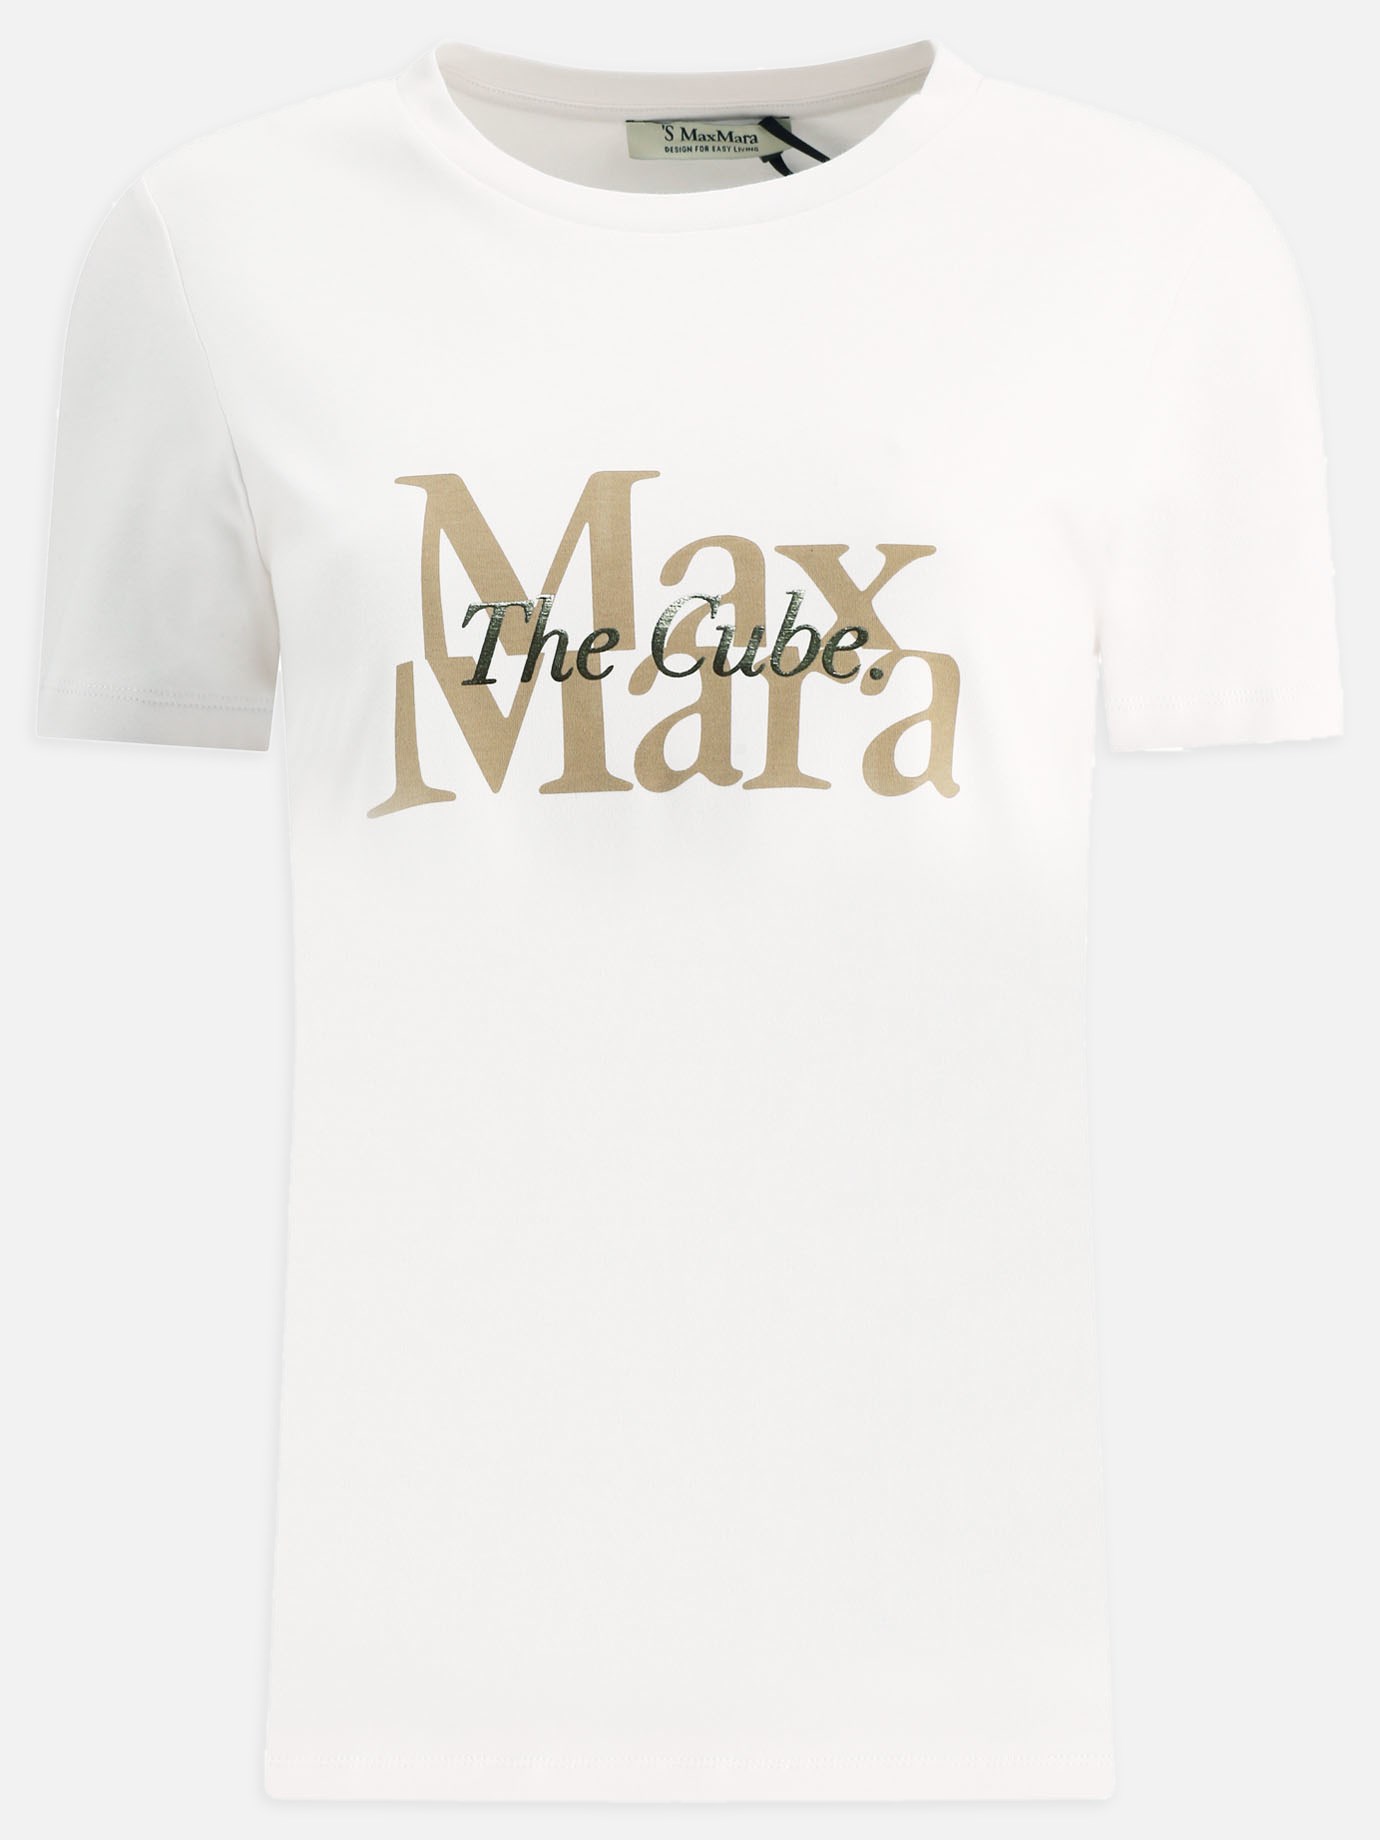  The Cube  t-shirtby Max Mara S - 3